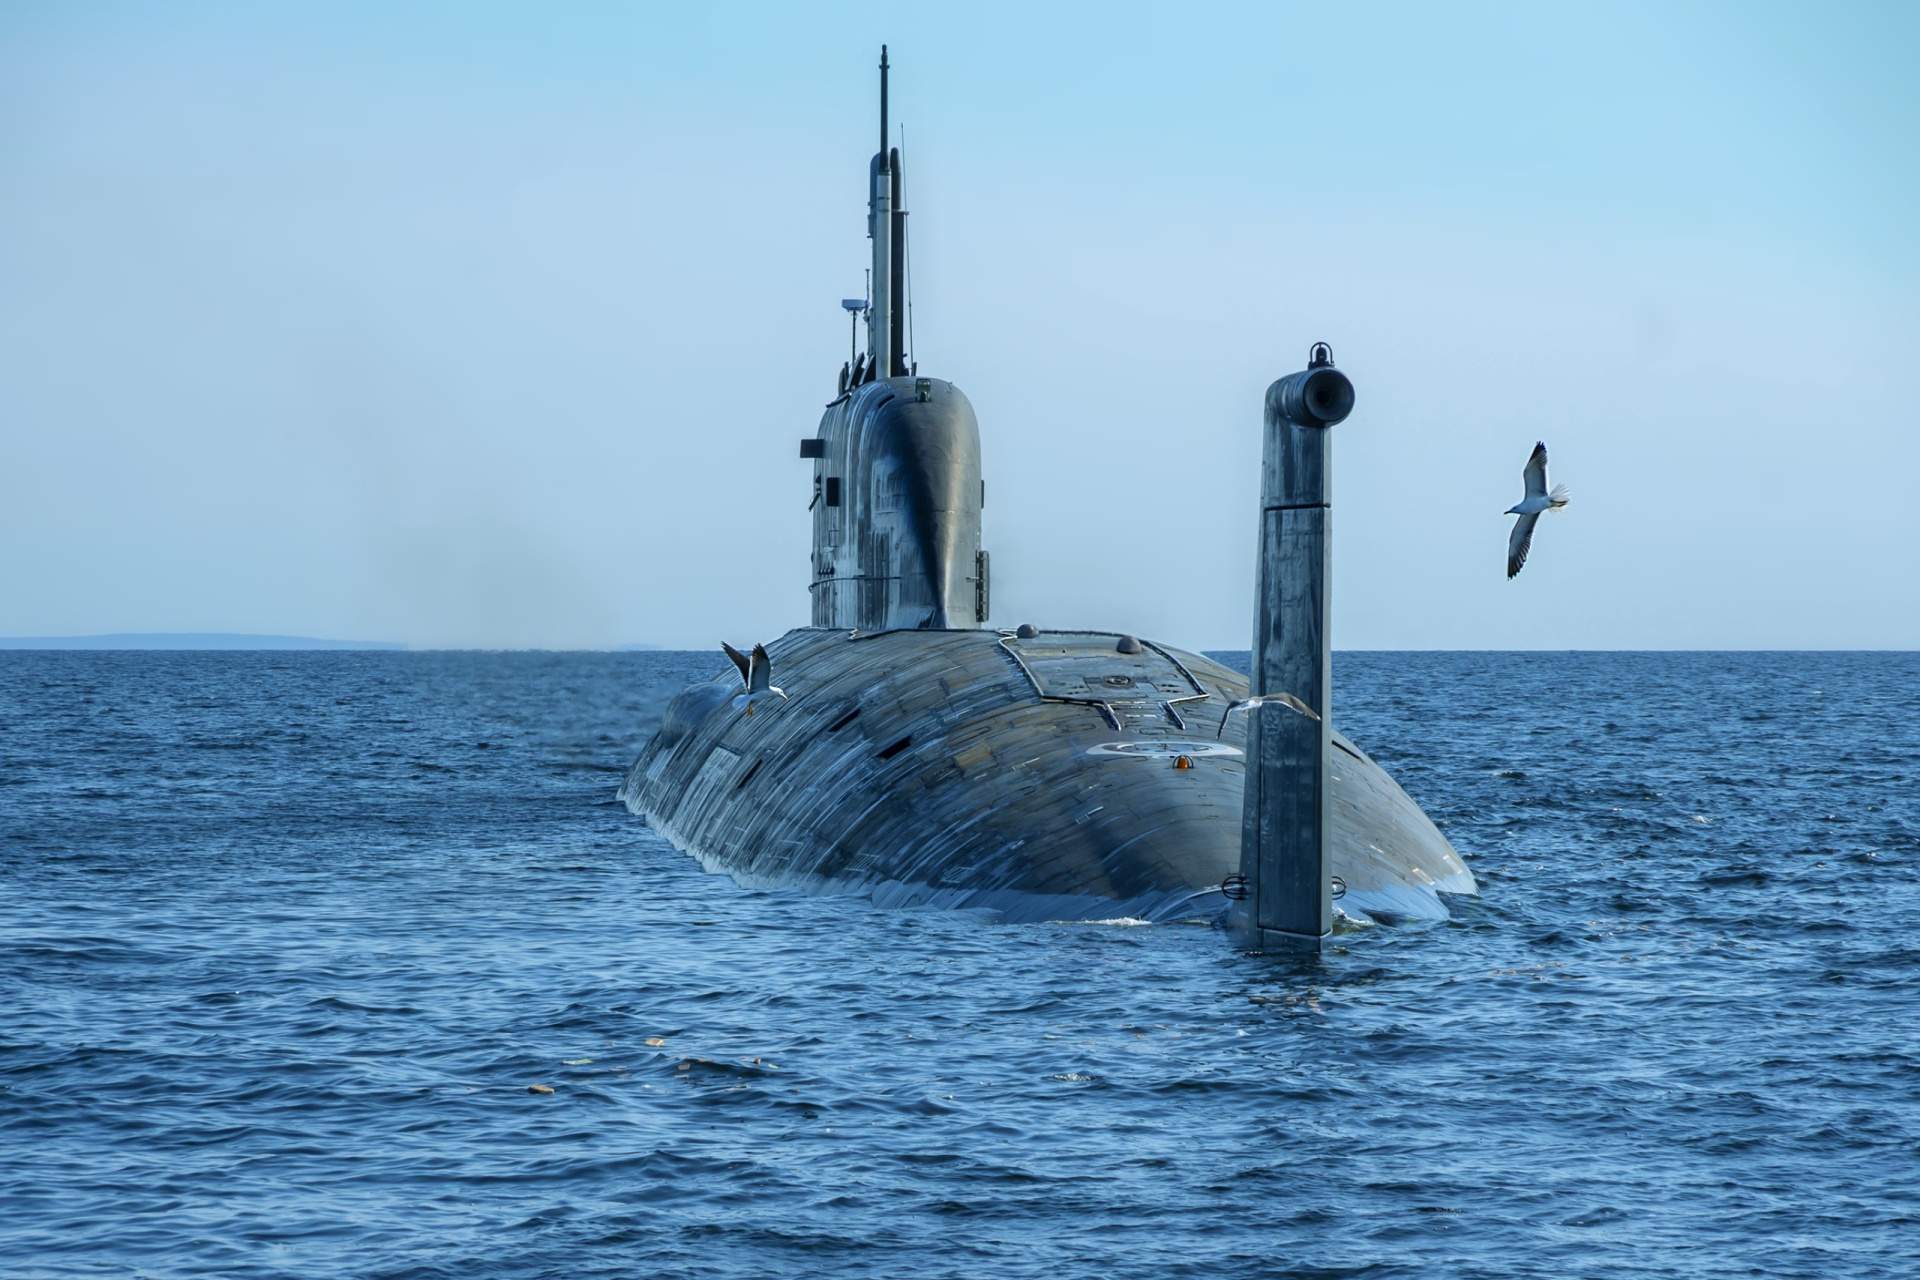 Yasen / graney class submarine - naval technology